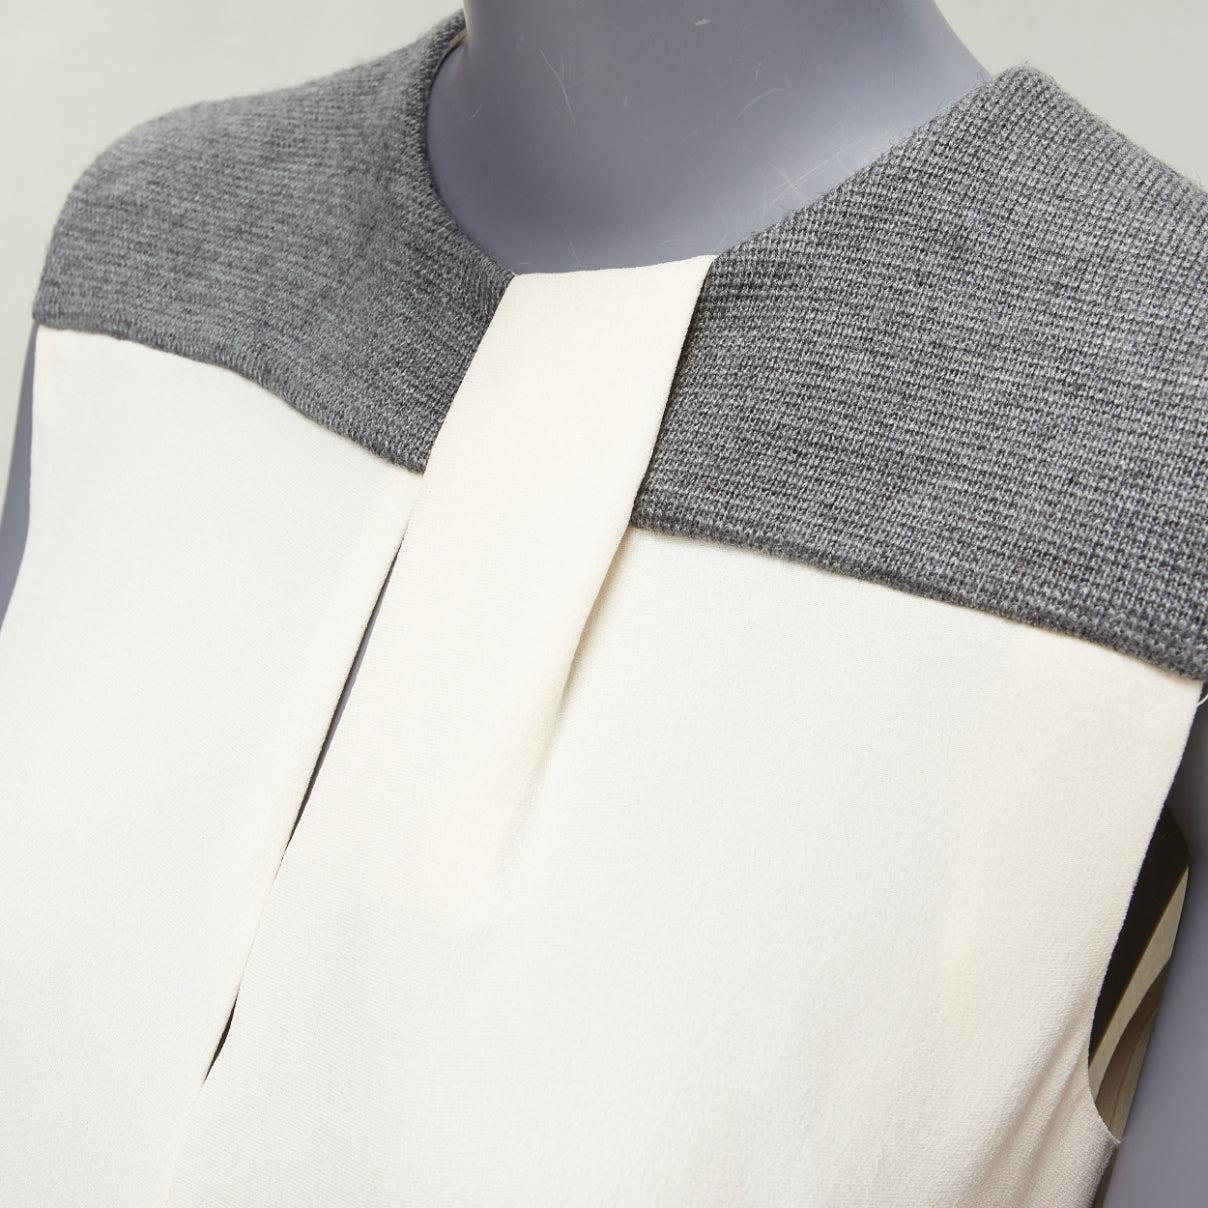 BALENCIAGA Silk 2014 cream silk crepe grey knitted yoke cut out blouse FR38 M
Reference: YIKK/A00057
Brand: Balenciaga
Designer: Nicolas Ghesquiere
Collection: 2014 Silk
Material: Silk, Acrylic, Blend
Color: Cream, Grey
Pattern: Solid
Closure: